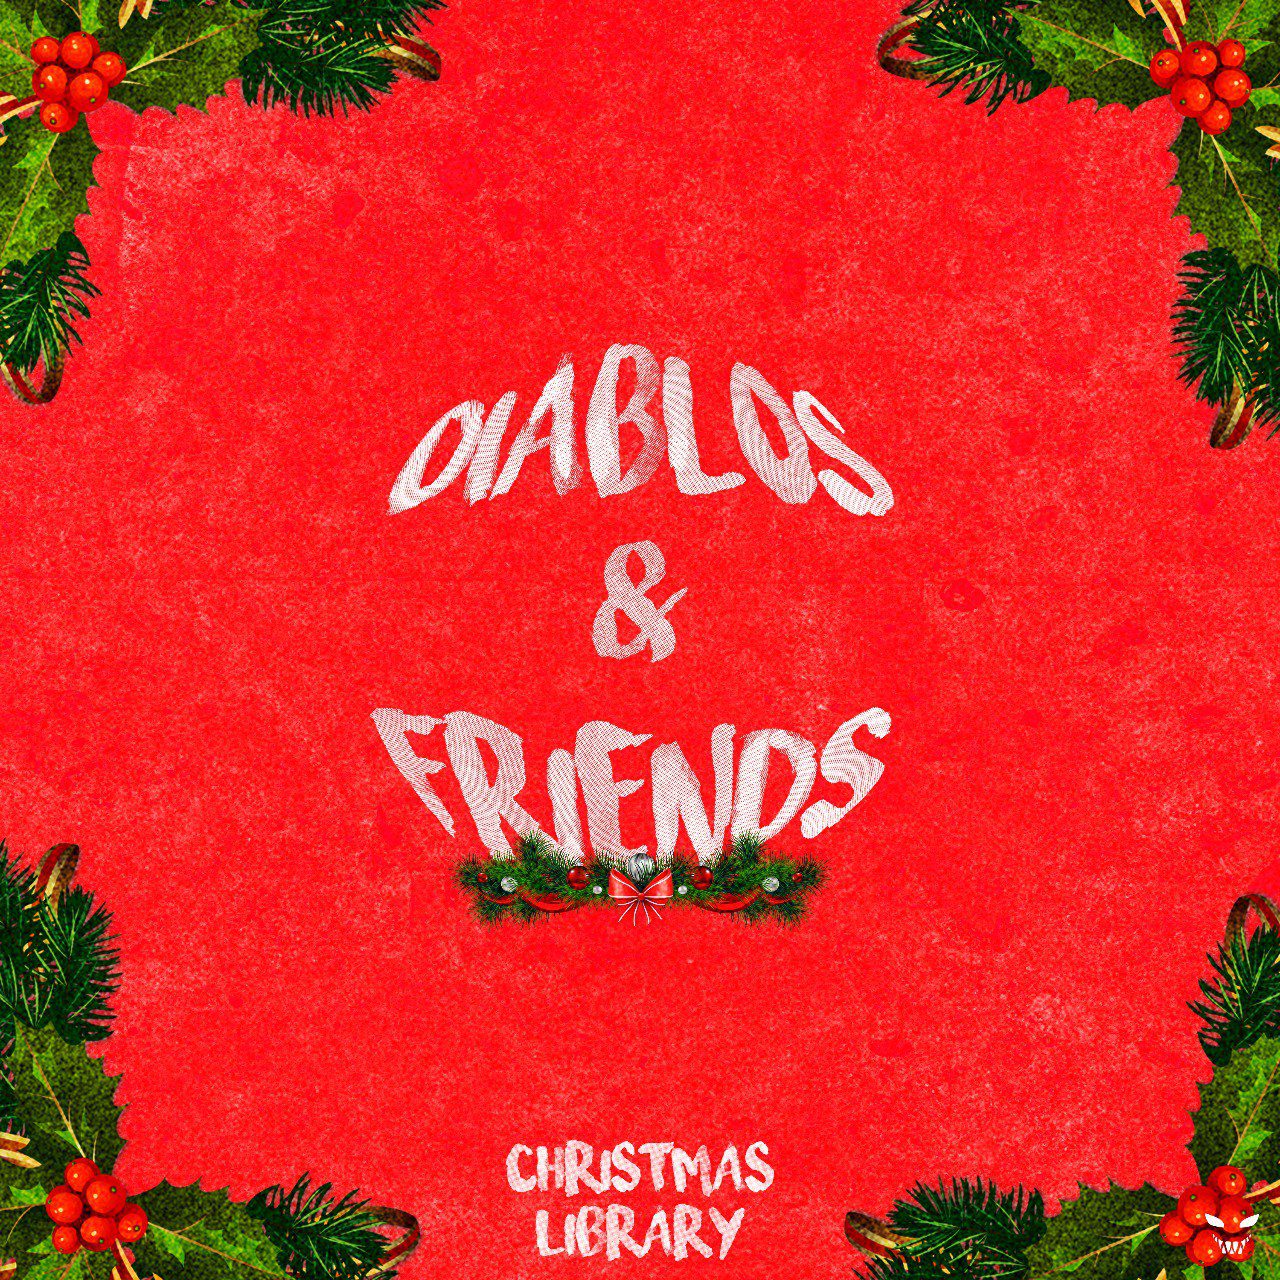 DIABLOS - DIABLOS & FRIENDS - CHRISTMAS LIBRARY